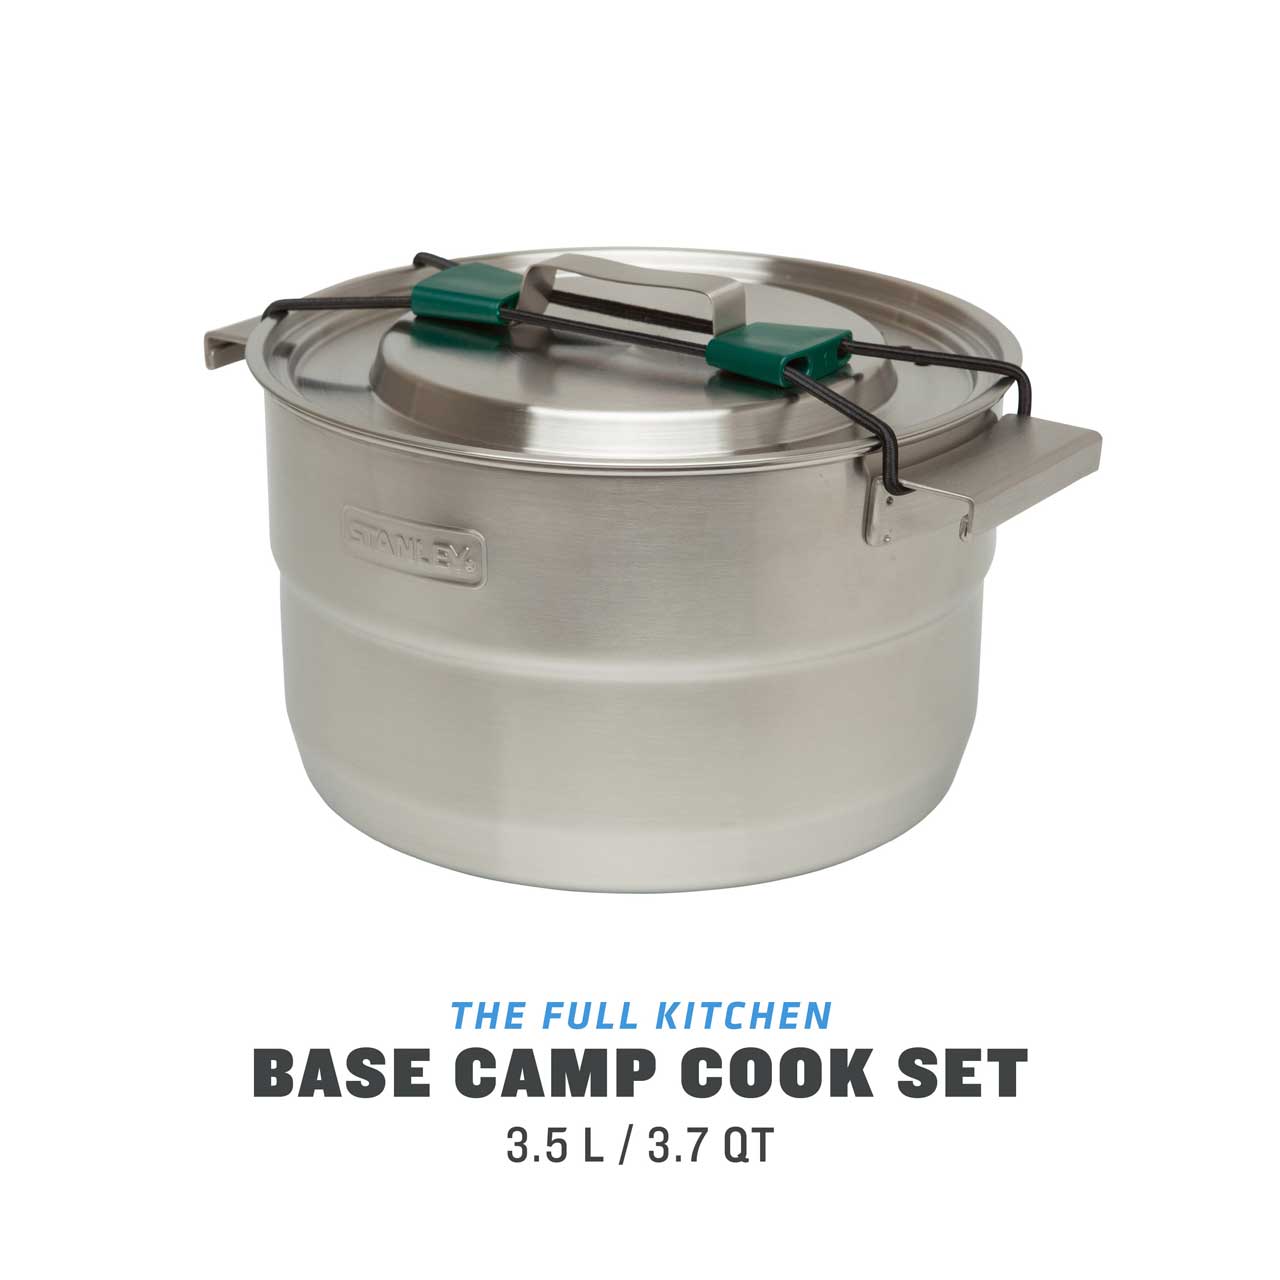 Adventure Base Camp Cook Set